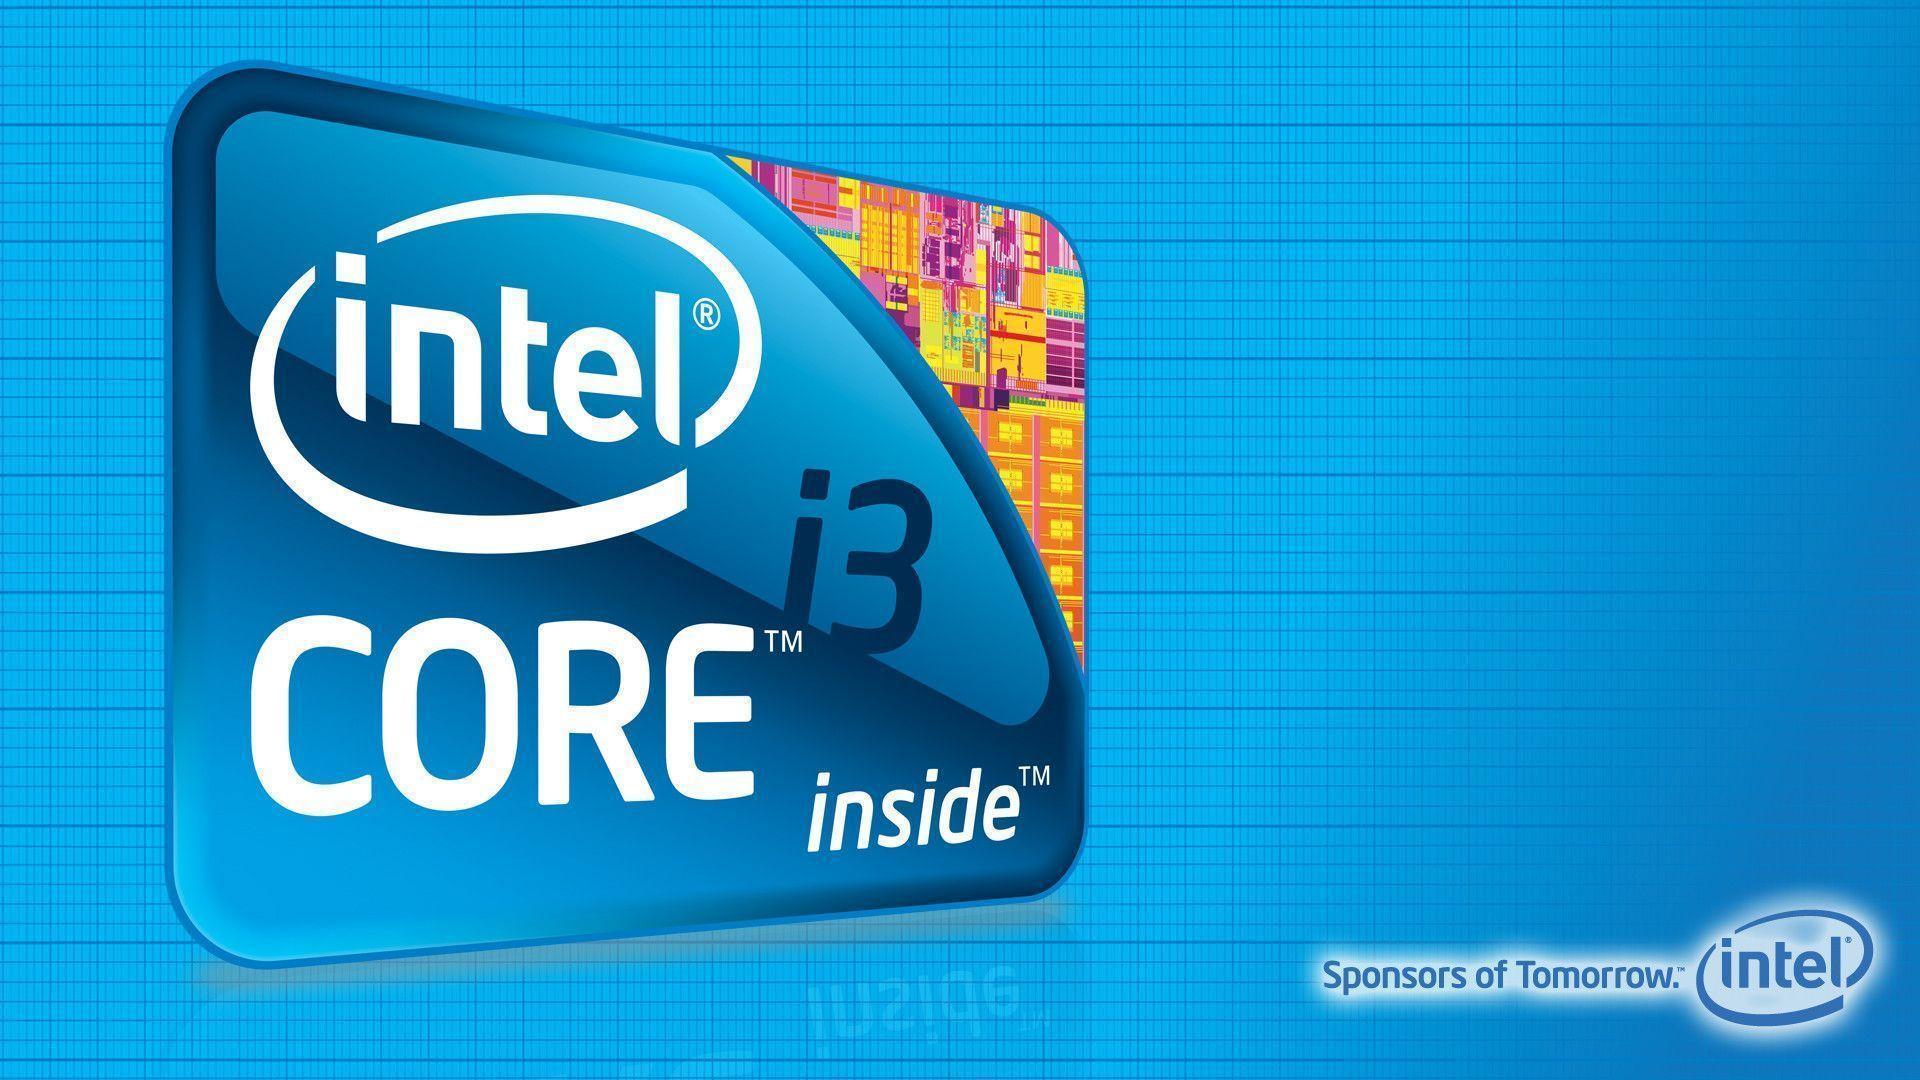 Intel Core I3 Wallpaper HD. Hdwidescreens